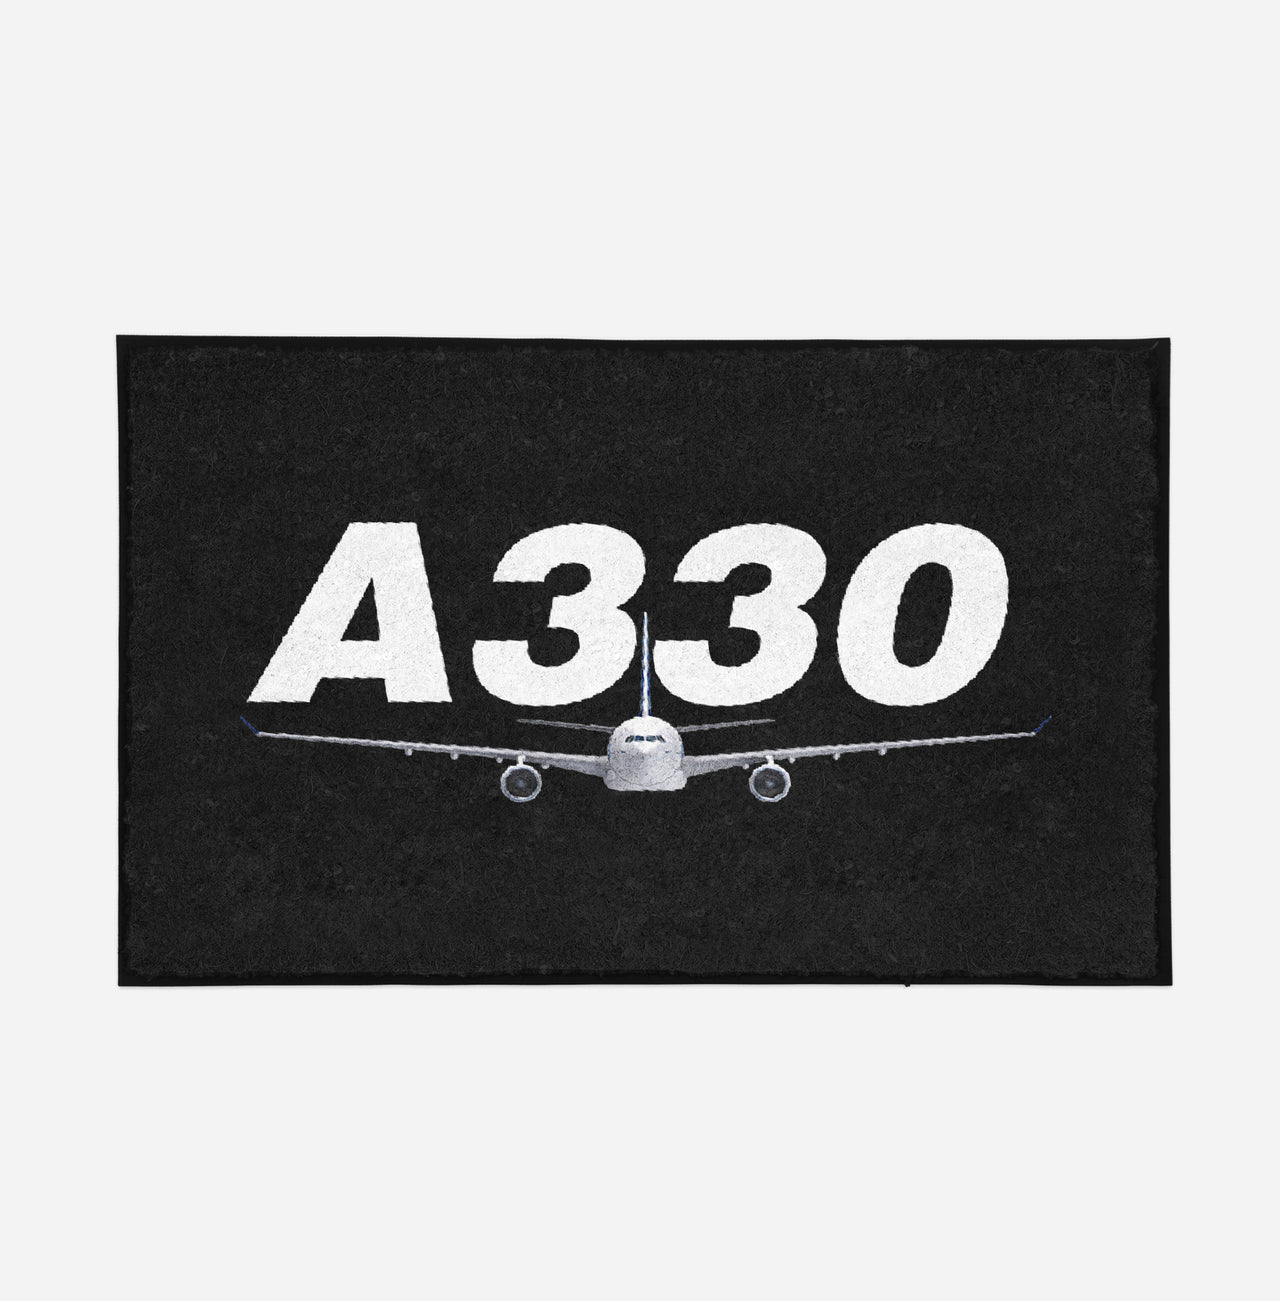 Super Airbus A330 Designed Door Mats